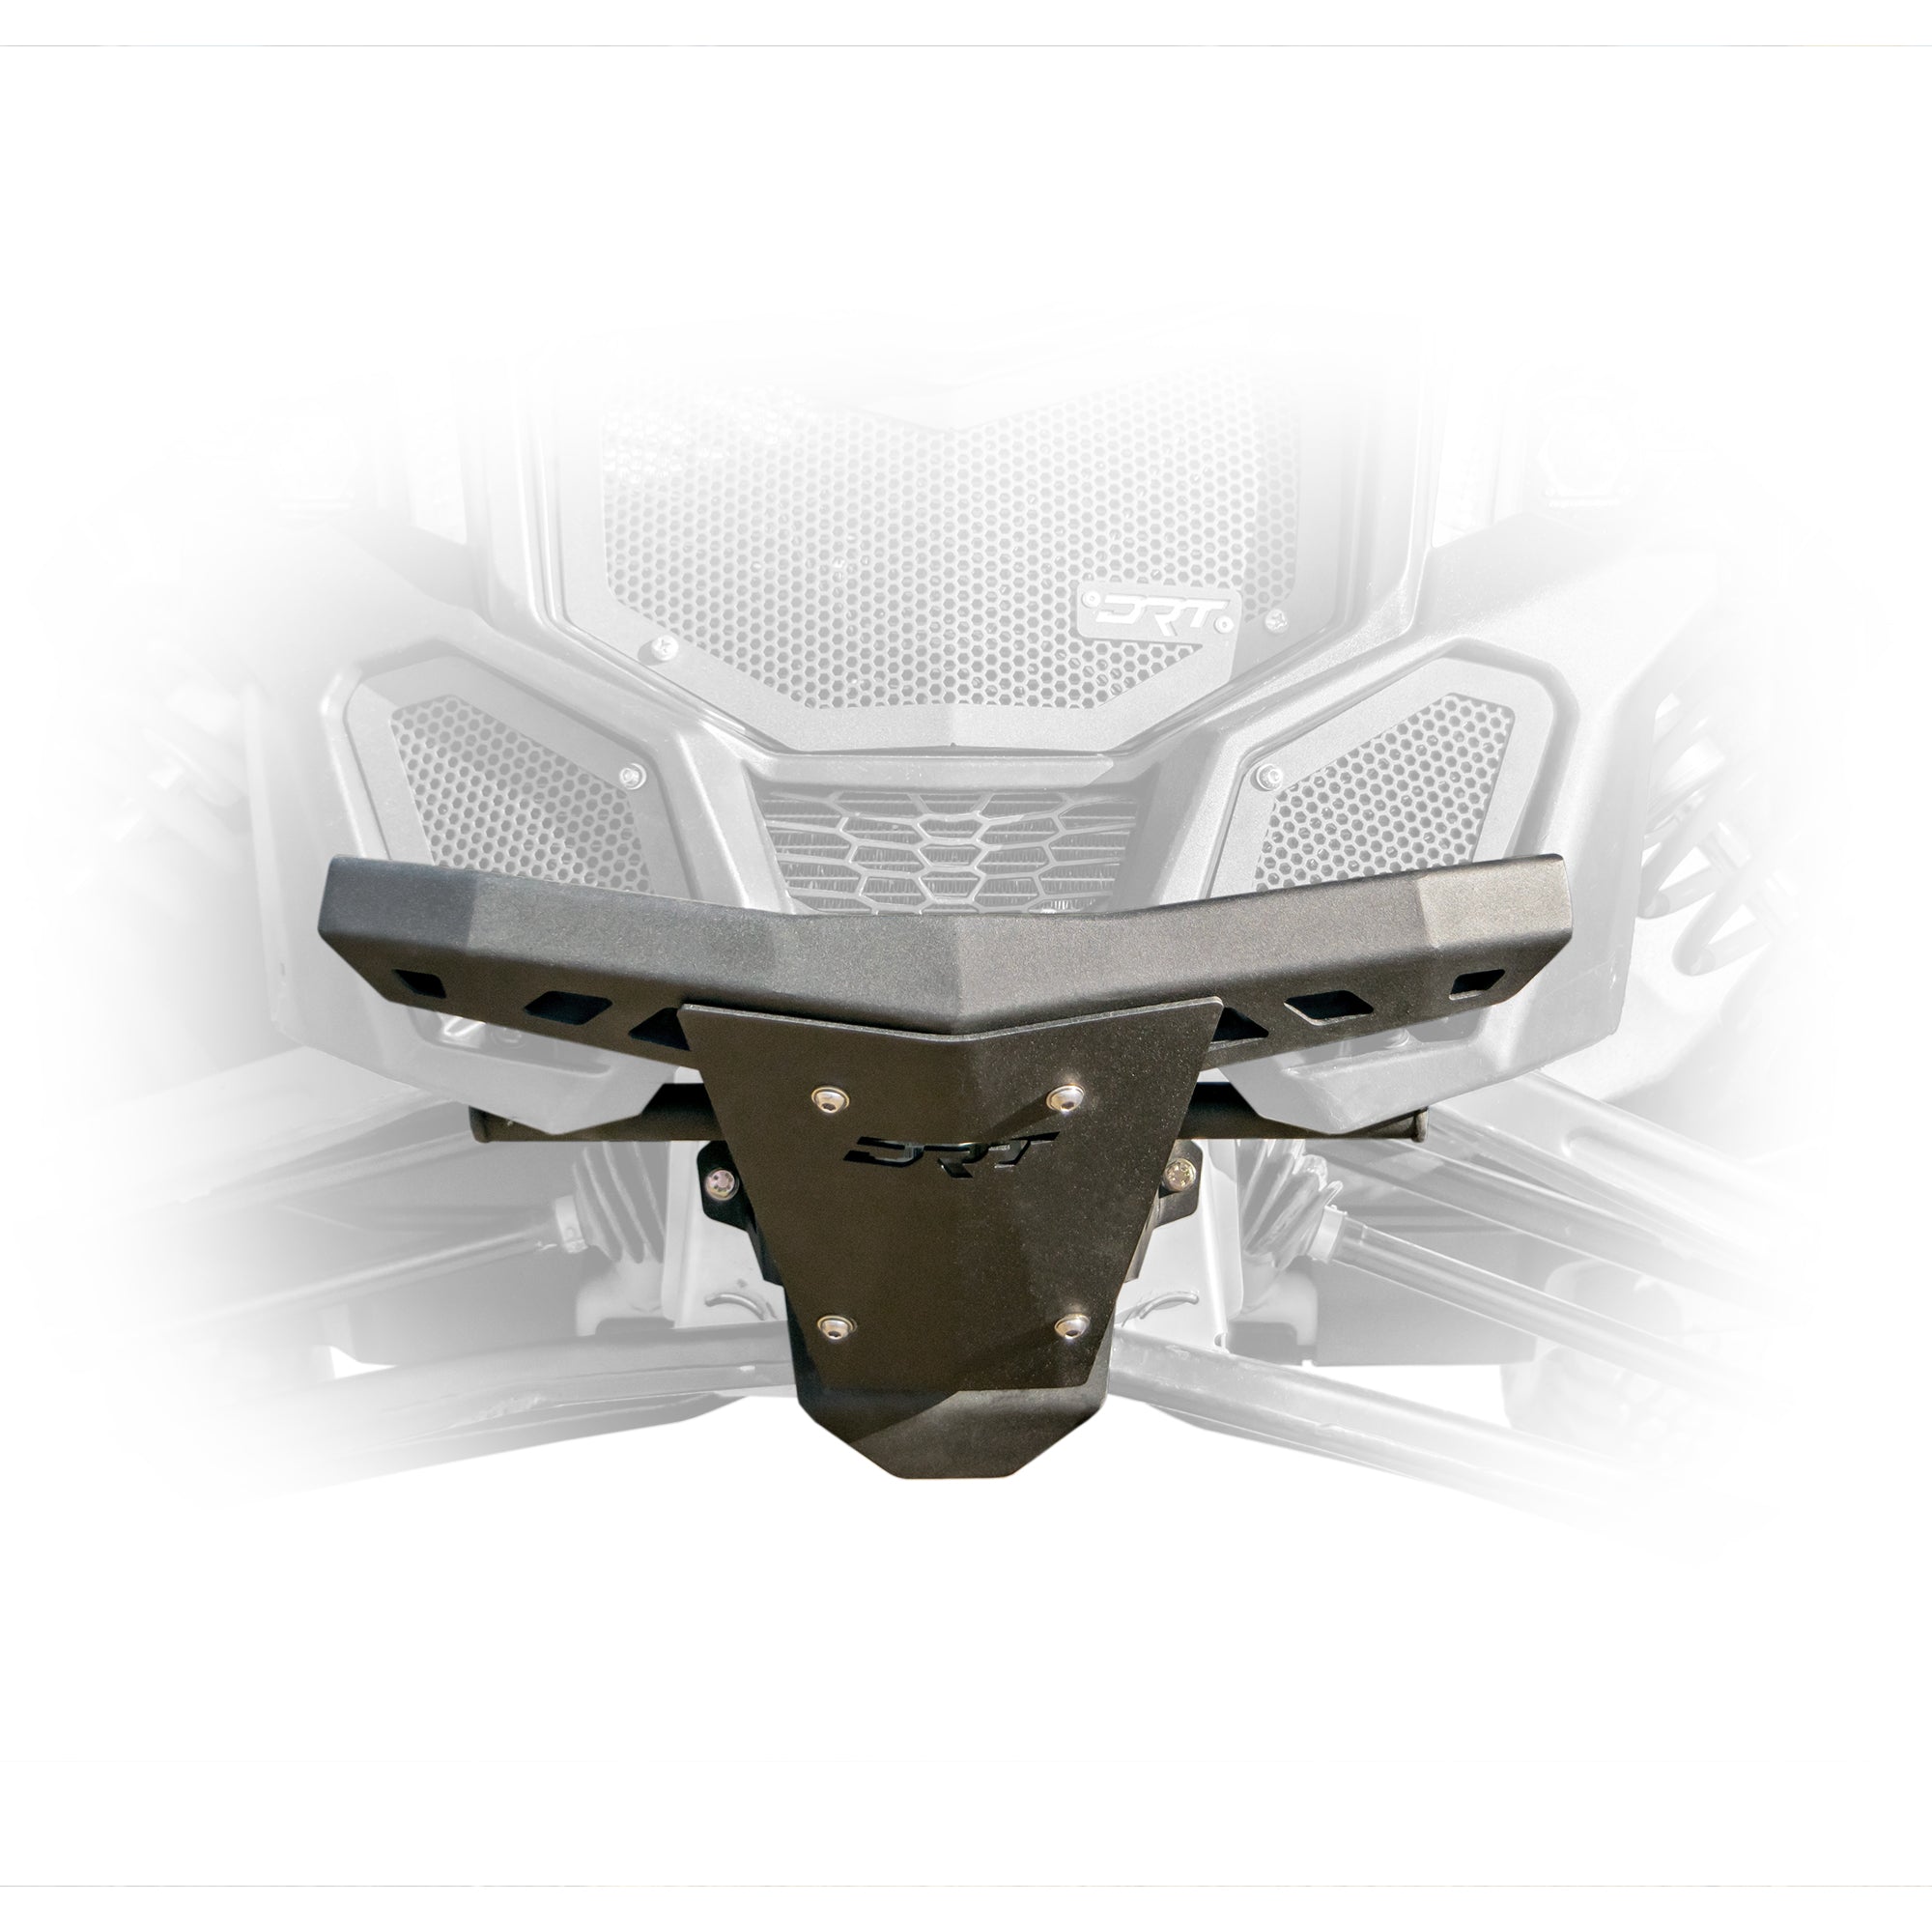 Drt Motorsports Can-Am X3 Front Bumper and Bulk Head